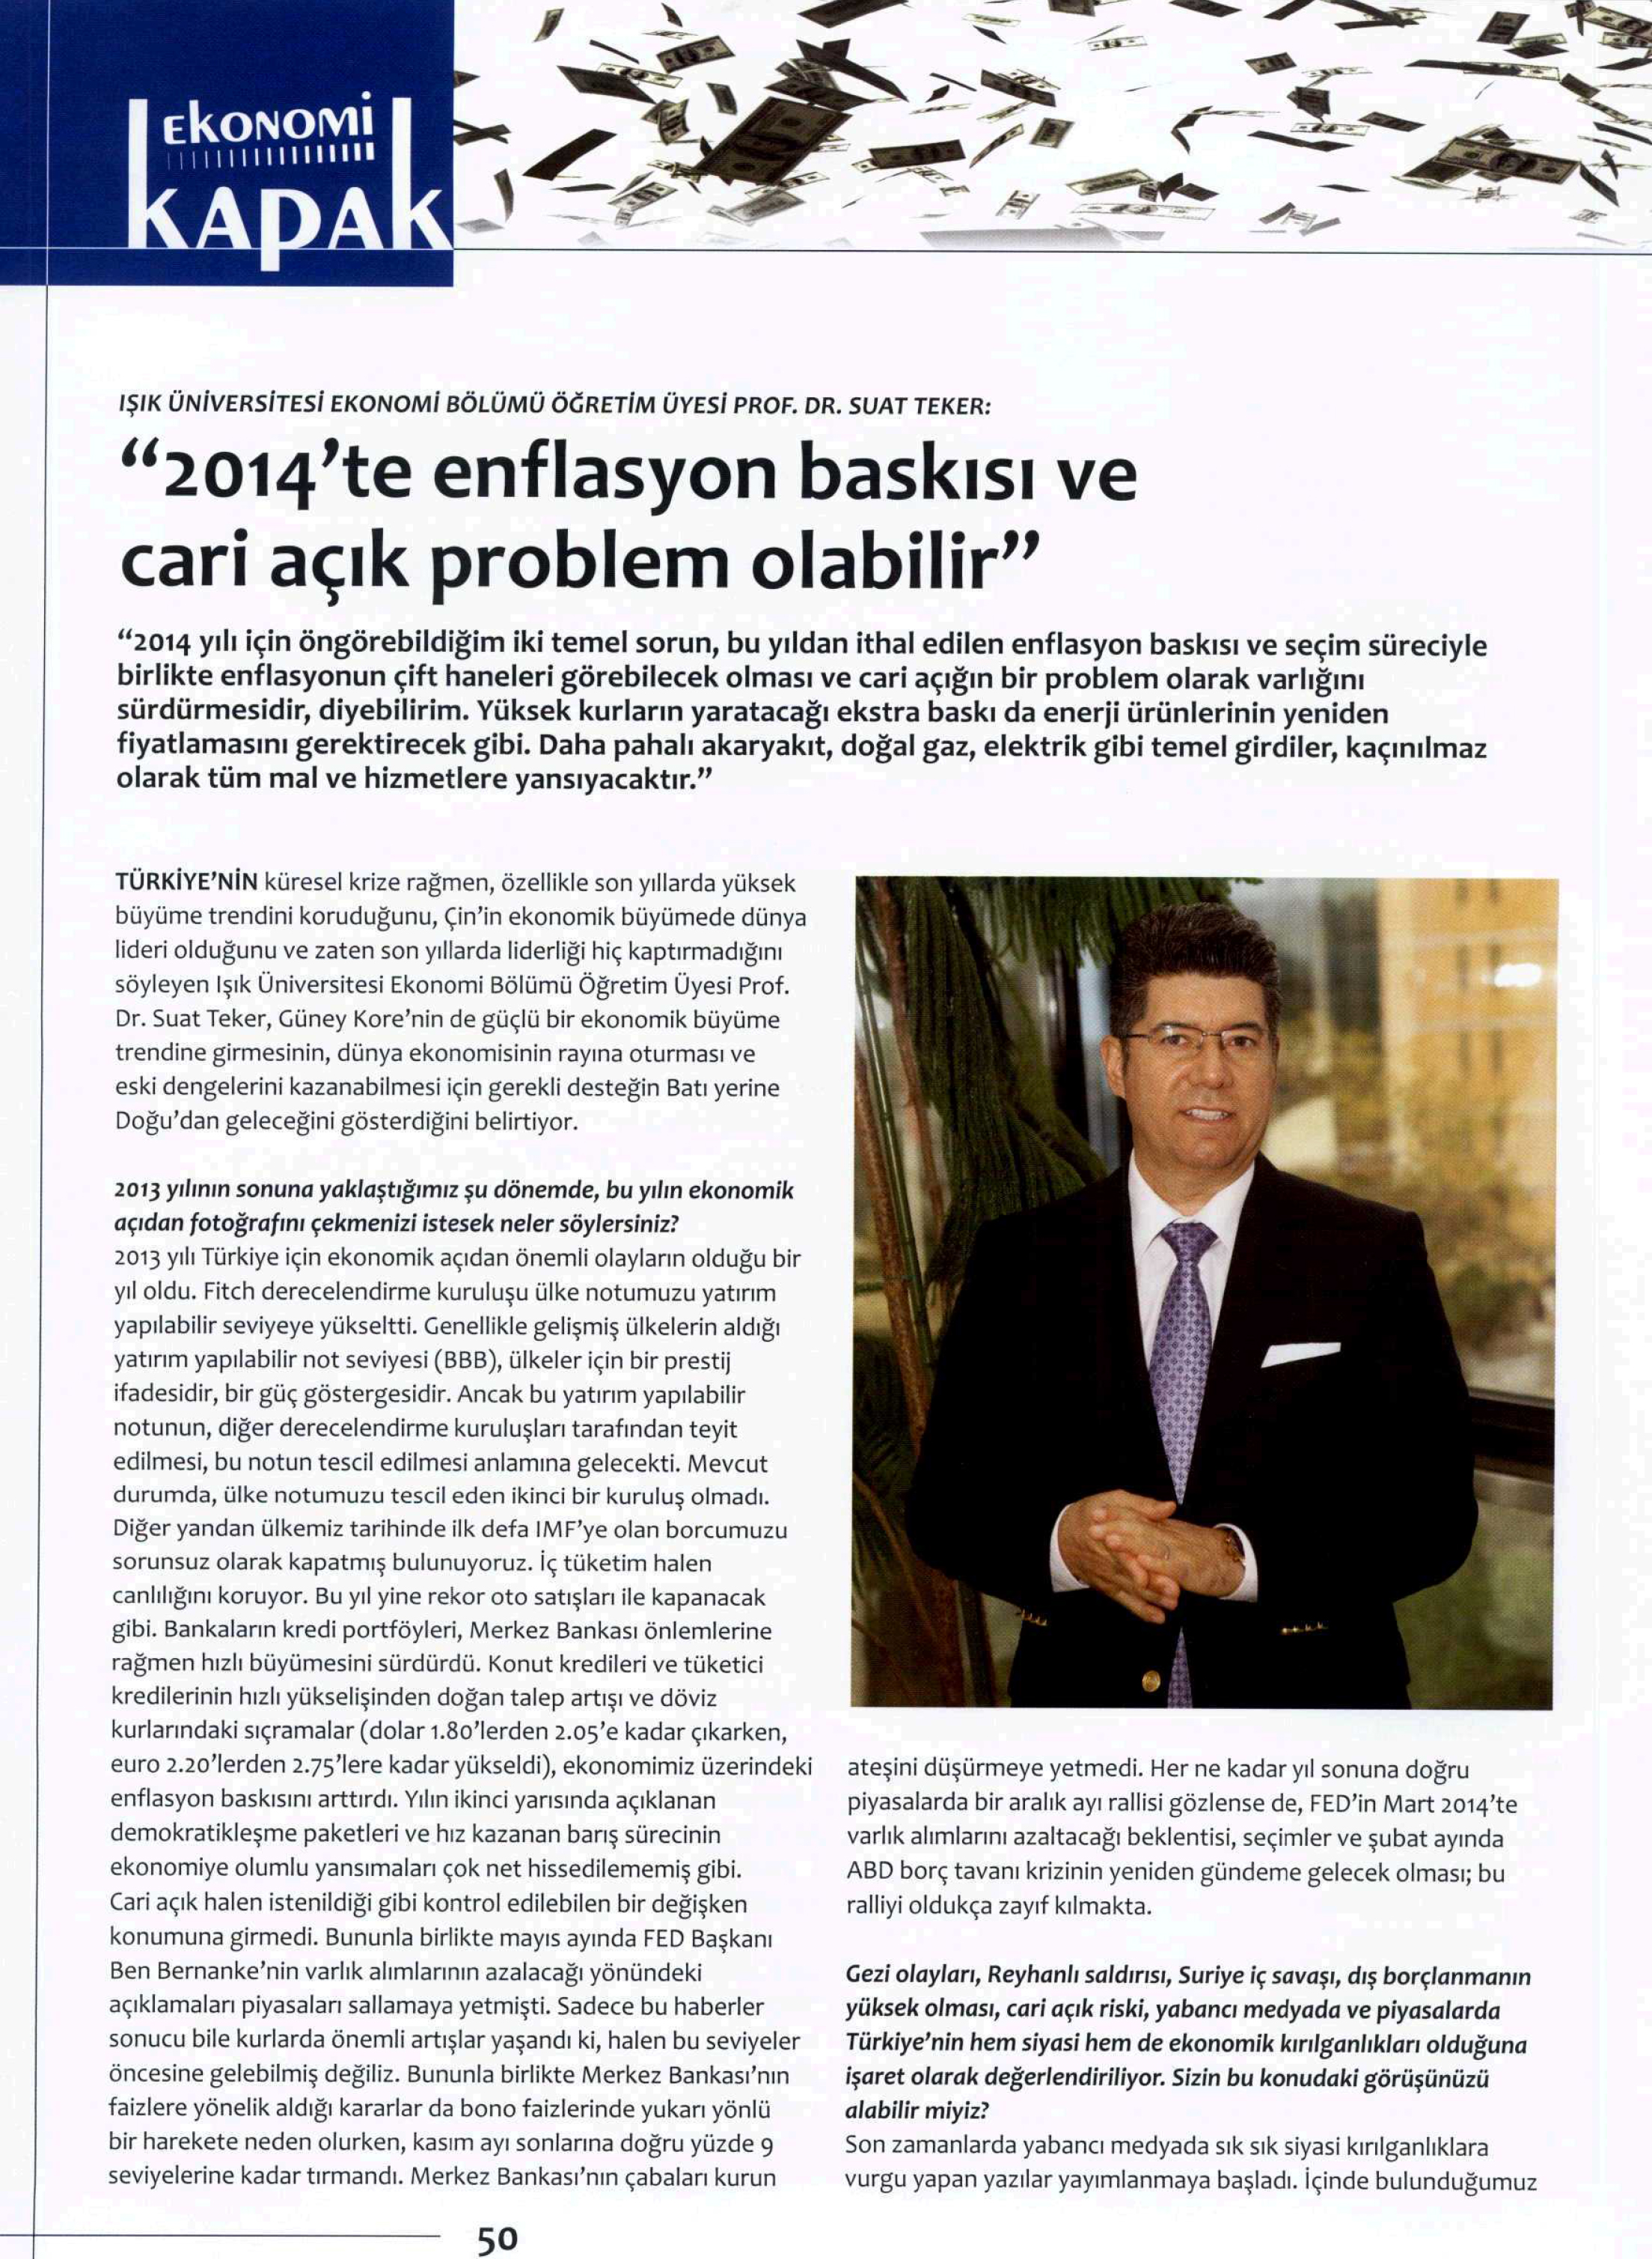 Kaysobilgi Dergisi-01.10.2013